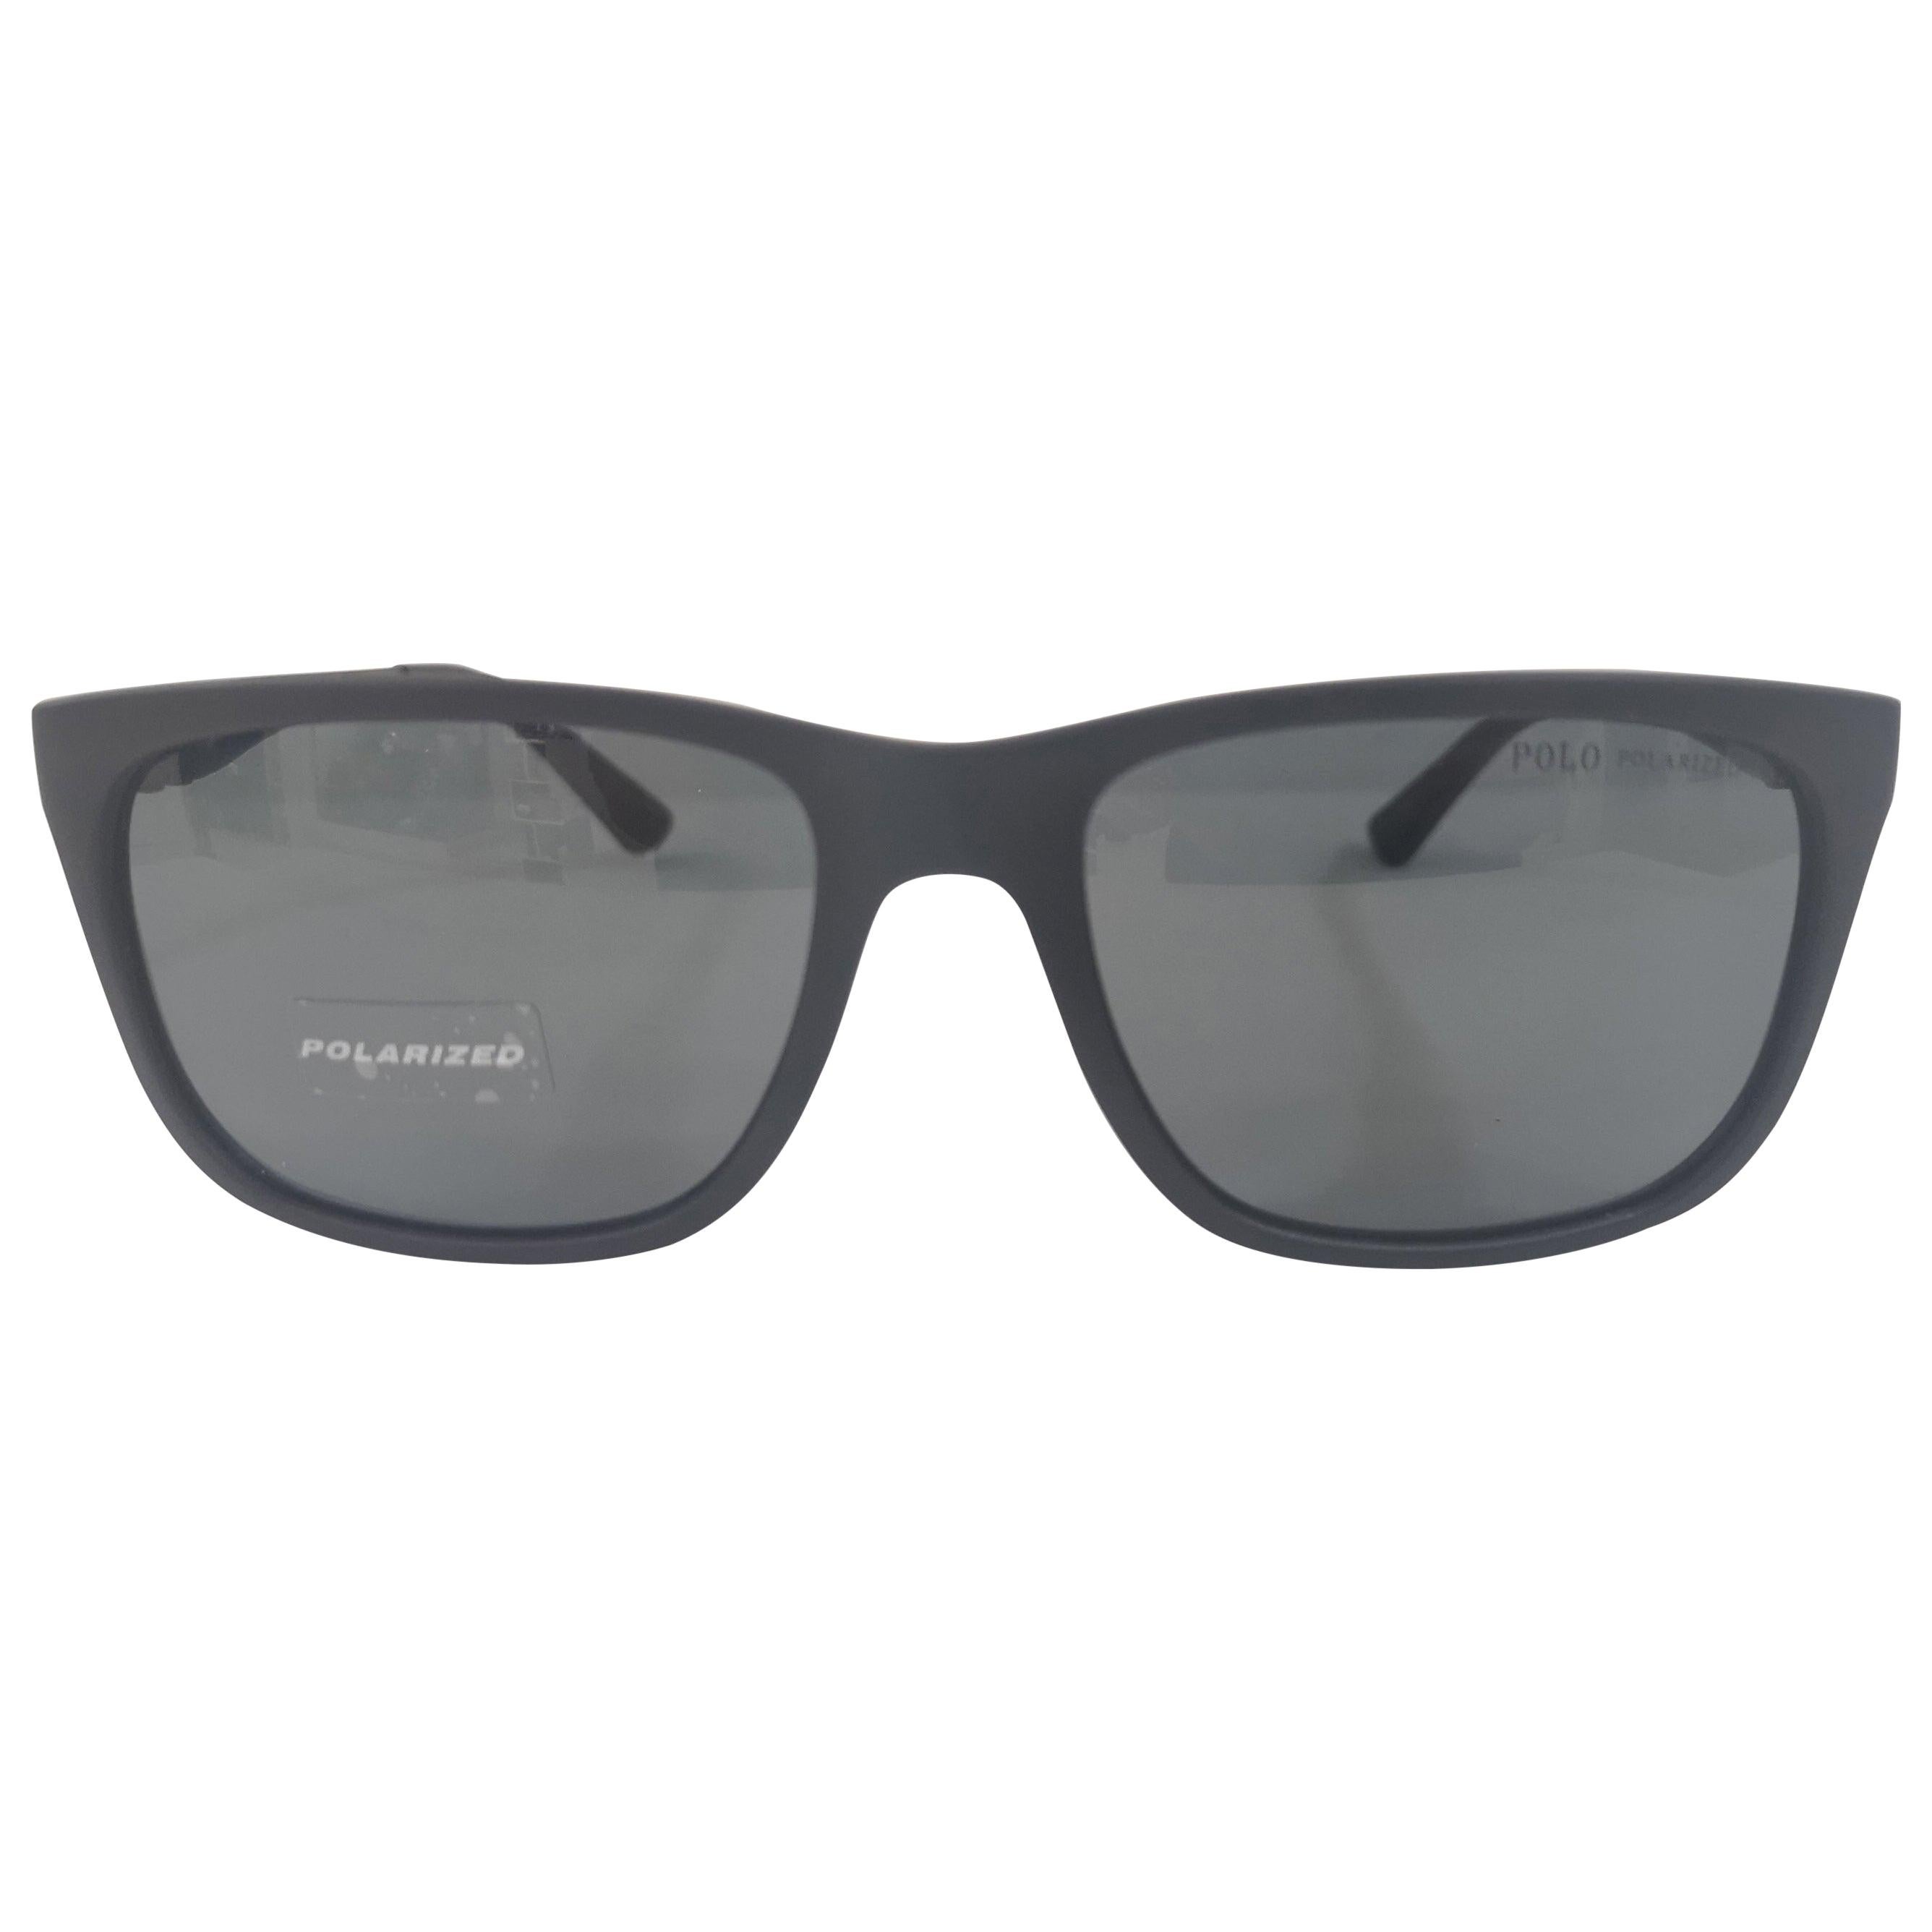 Ralph Lauren blue polarized sunglasses NWOT For Sale